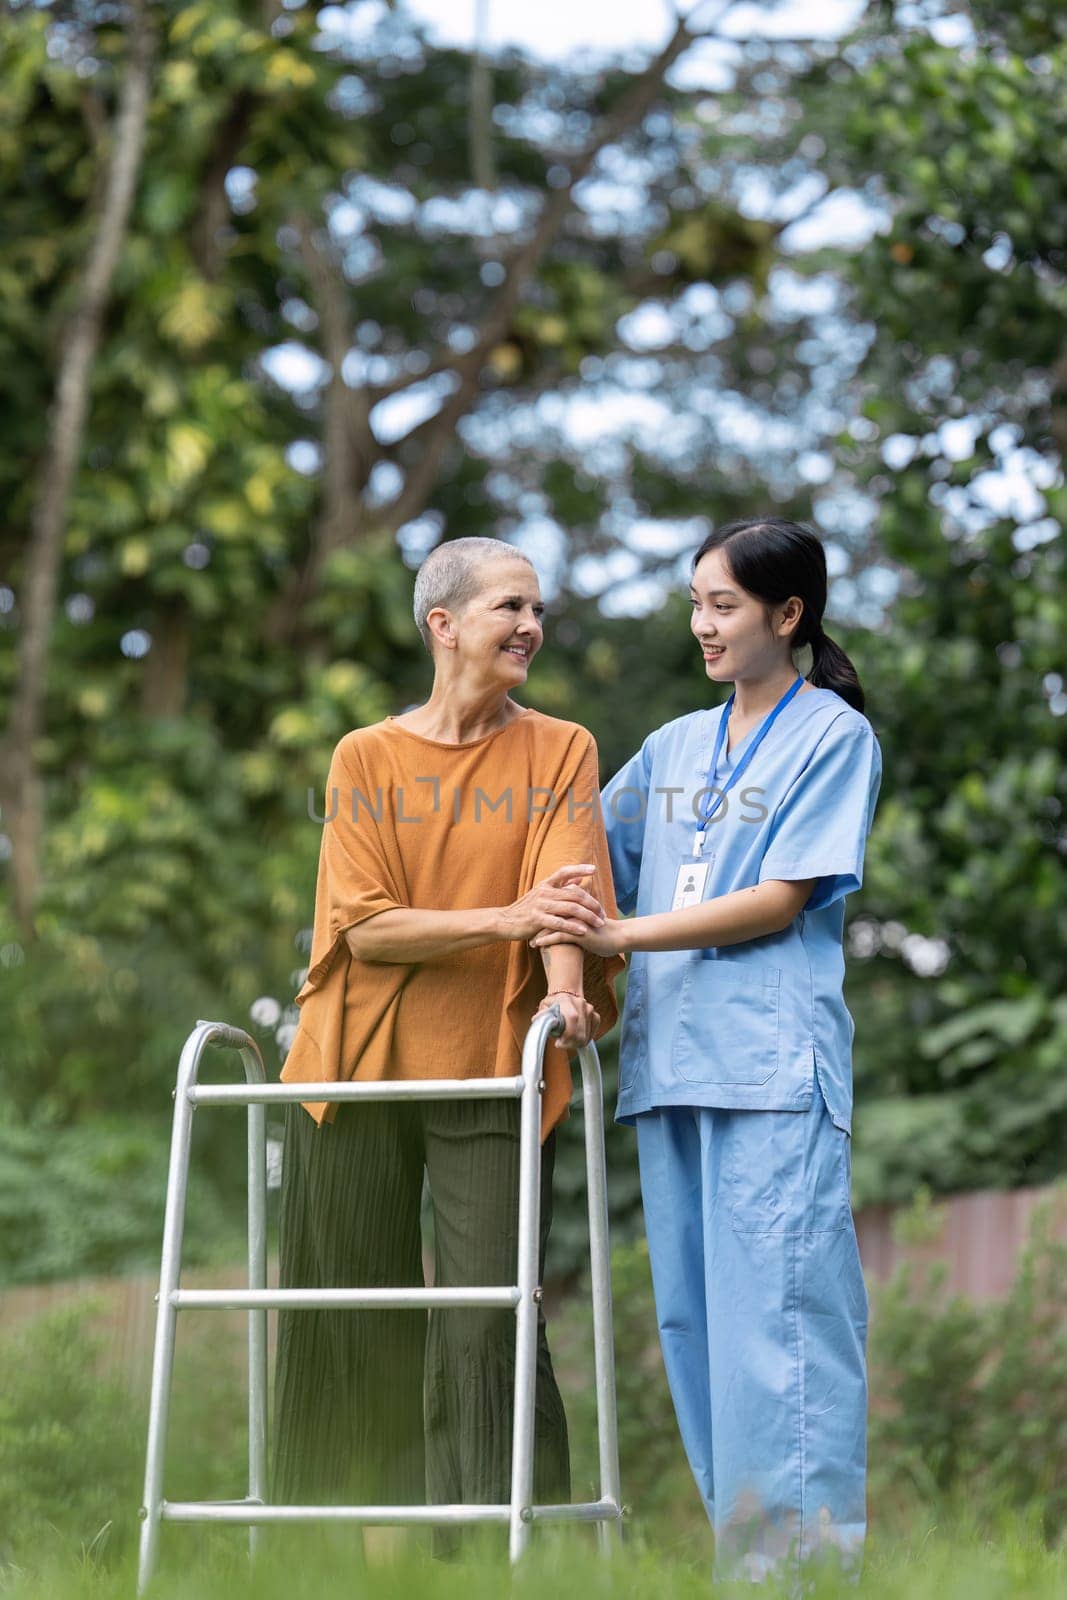 Nurse or caregiver help elderly walk by using walker and elderly touching caregiver hand by itchaznong